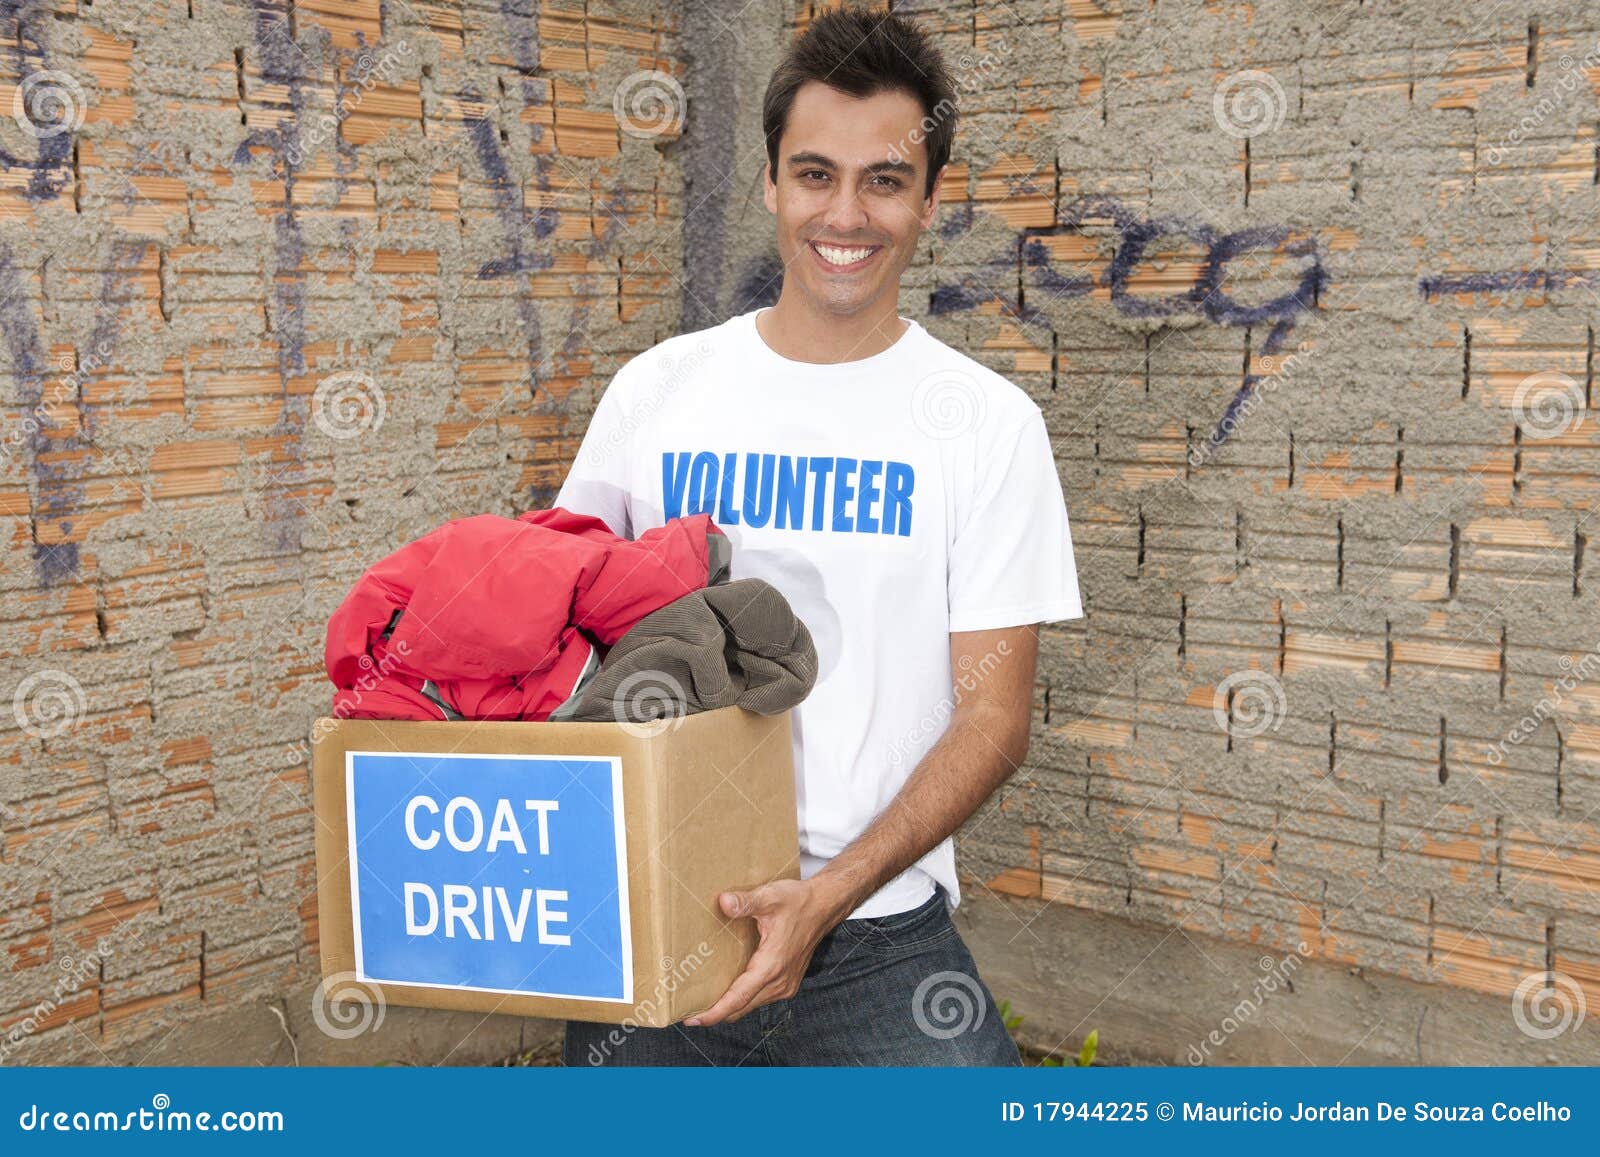 volunteer with coat drive donation box